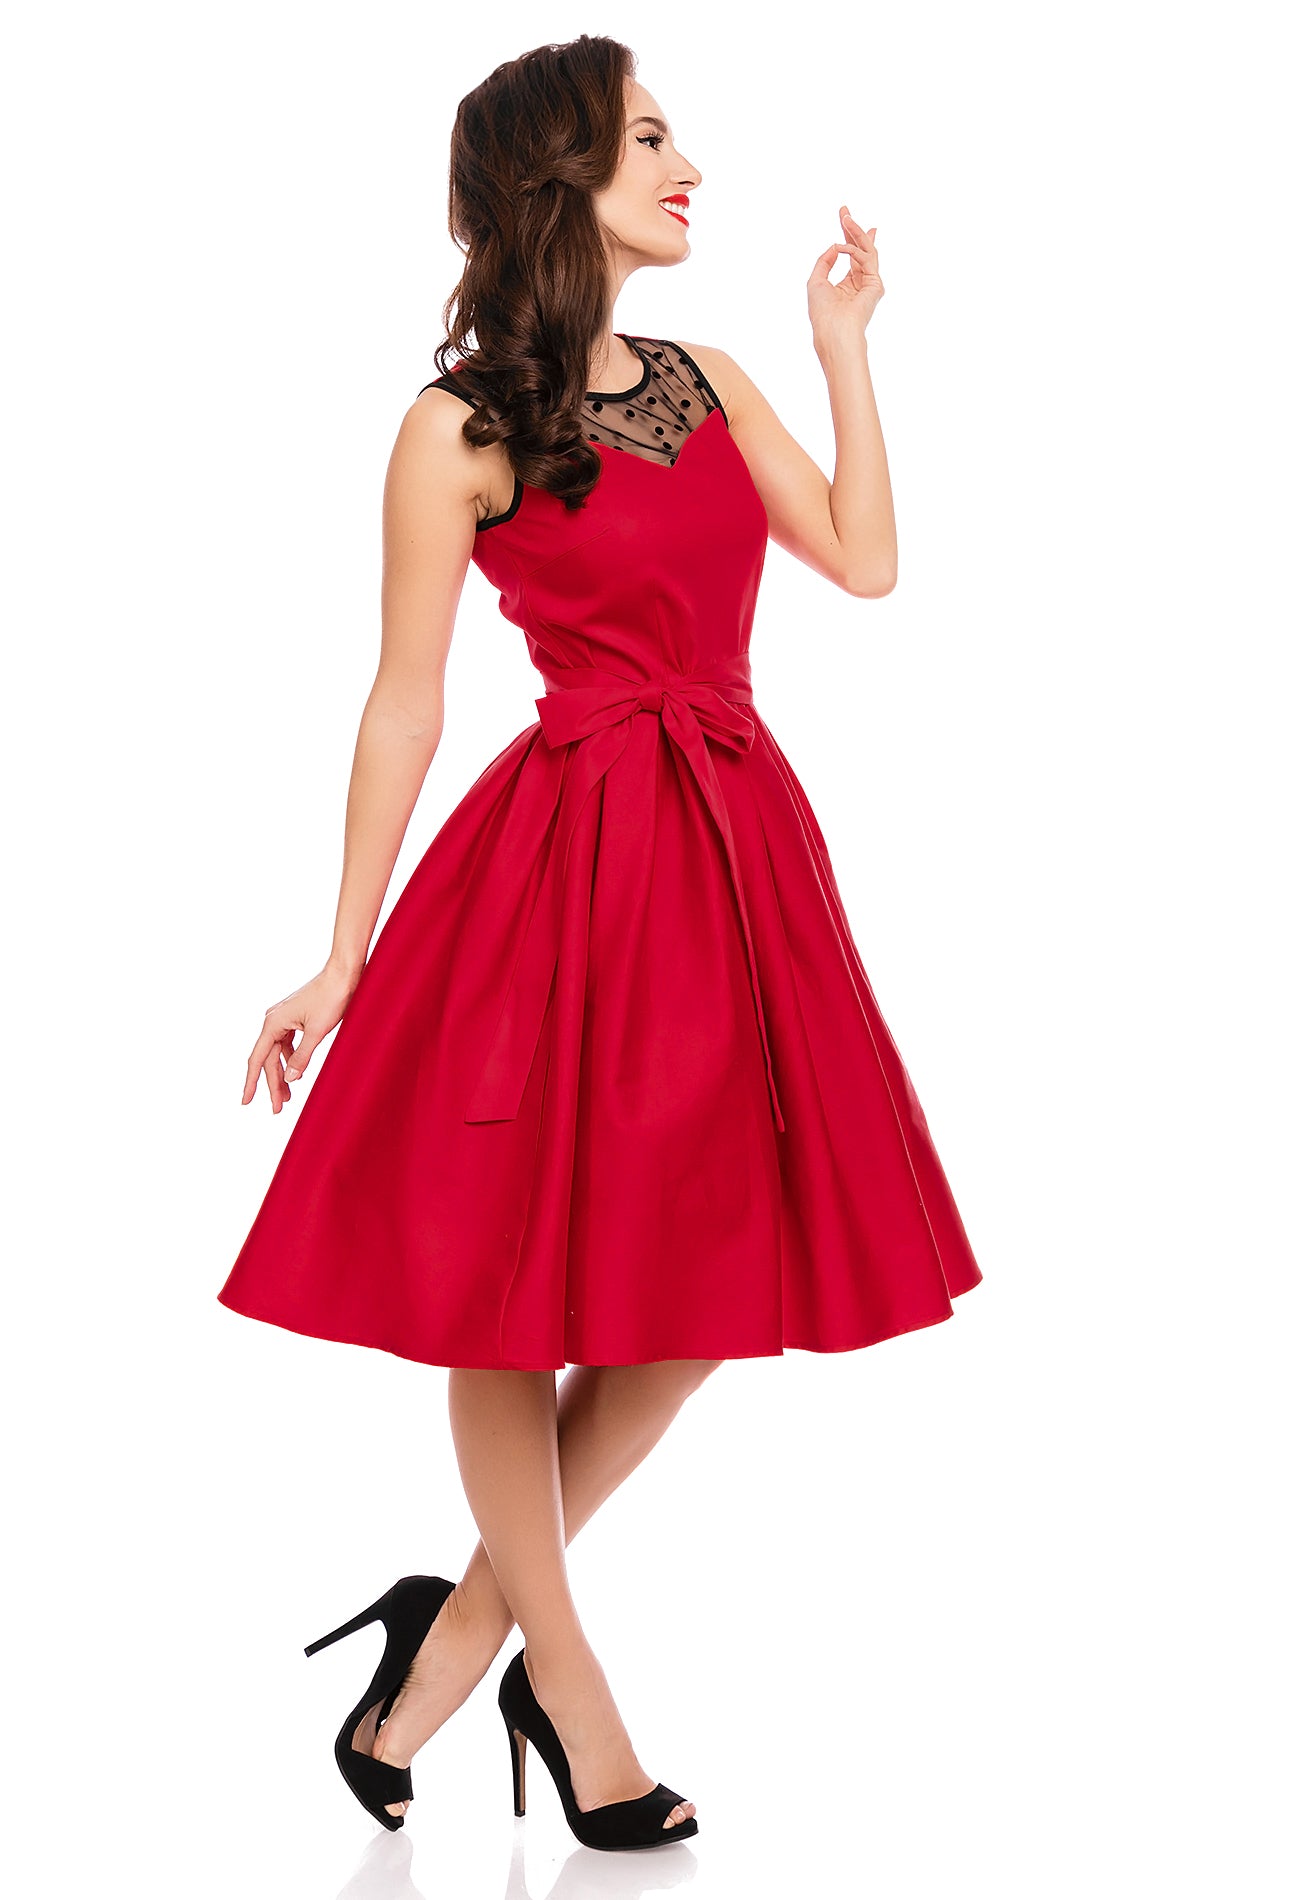 Model wearing red retro dress side view